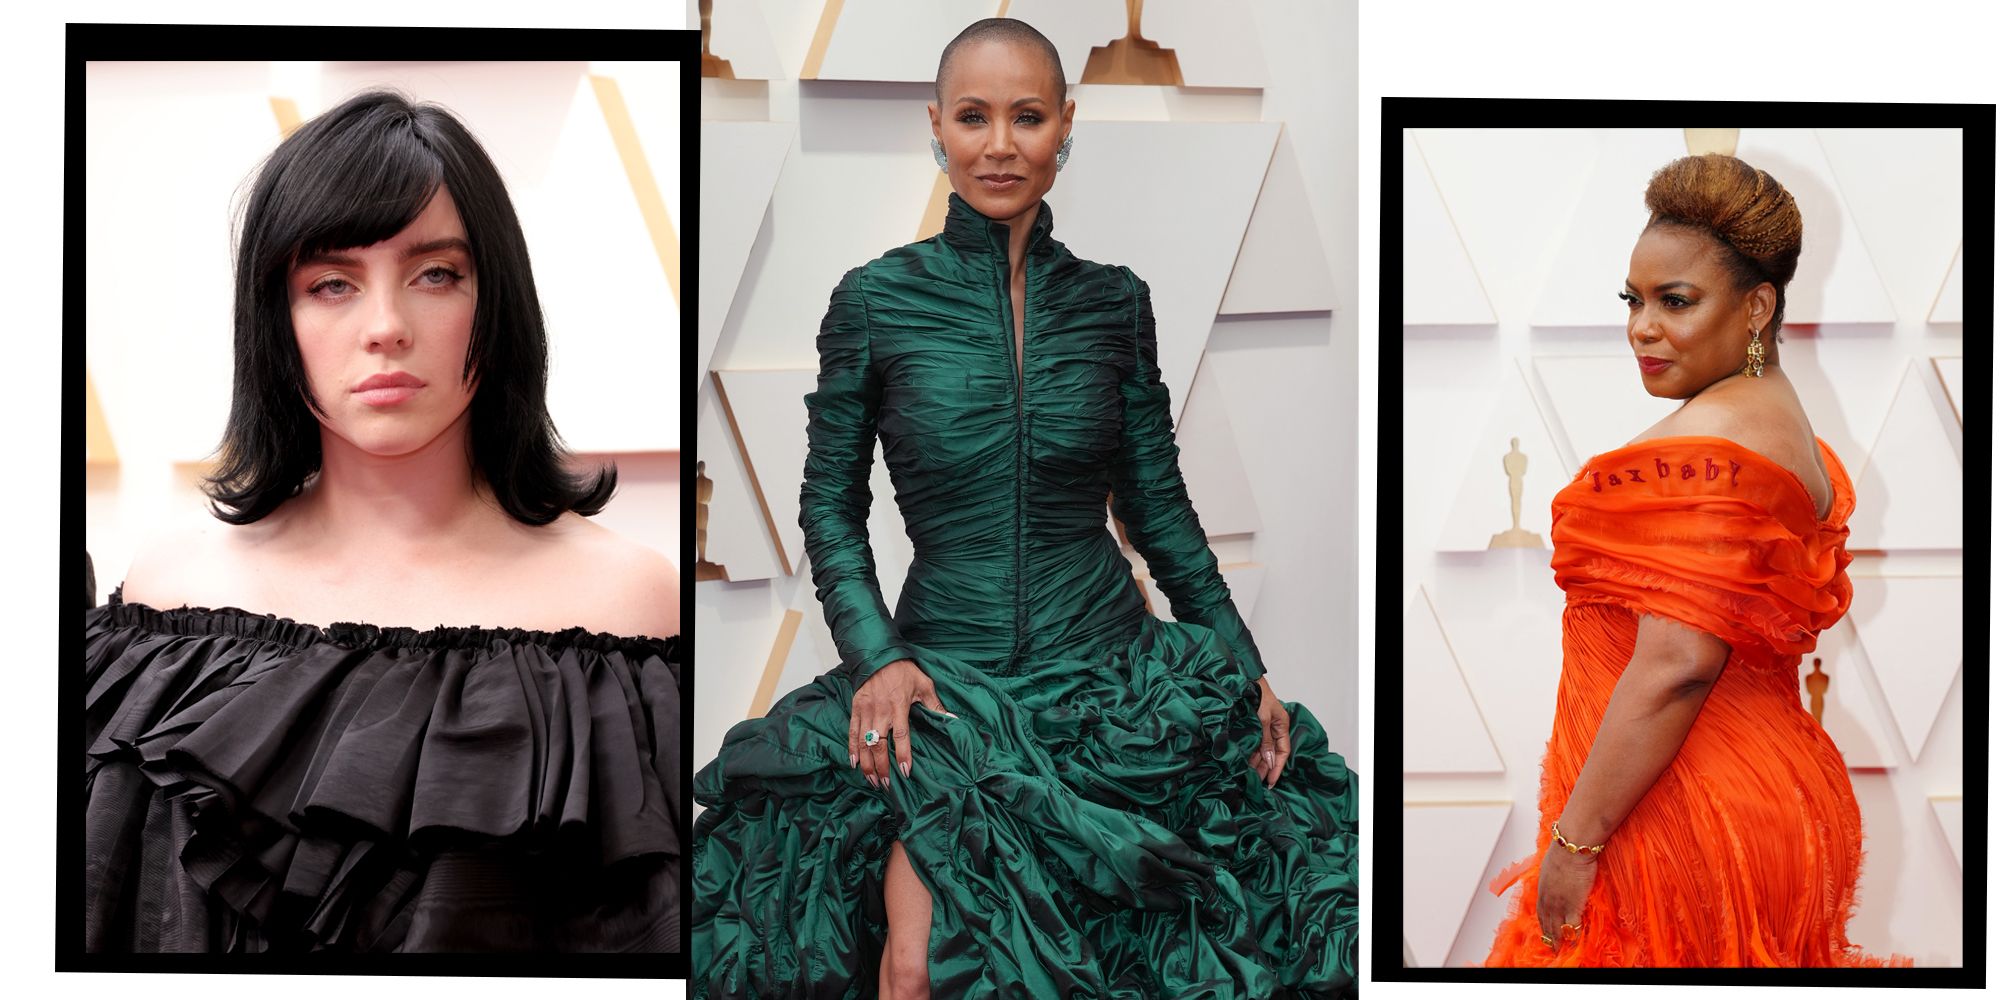 How Louis Vuitton Created Alana Haim's Ethereal Gown for the 2022 Oscars